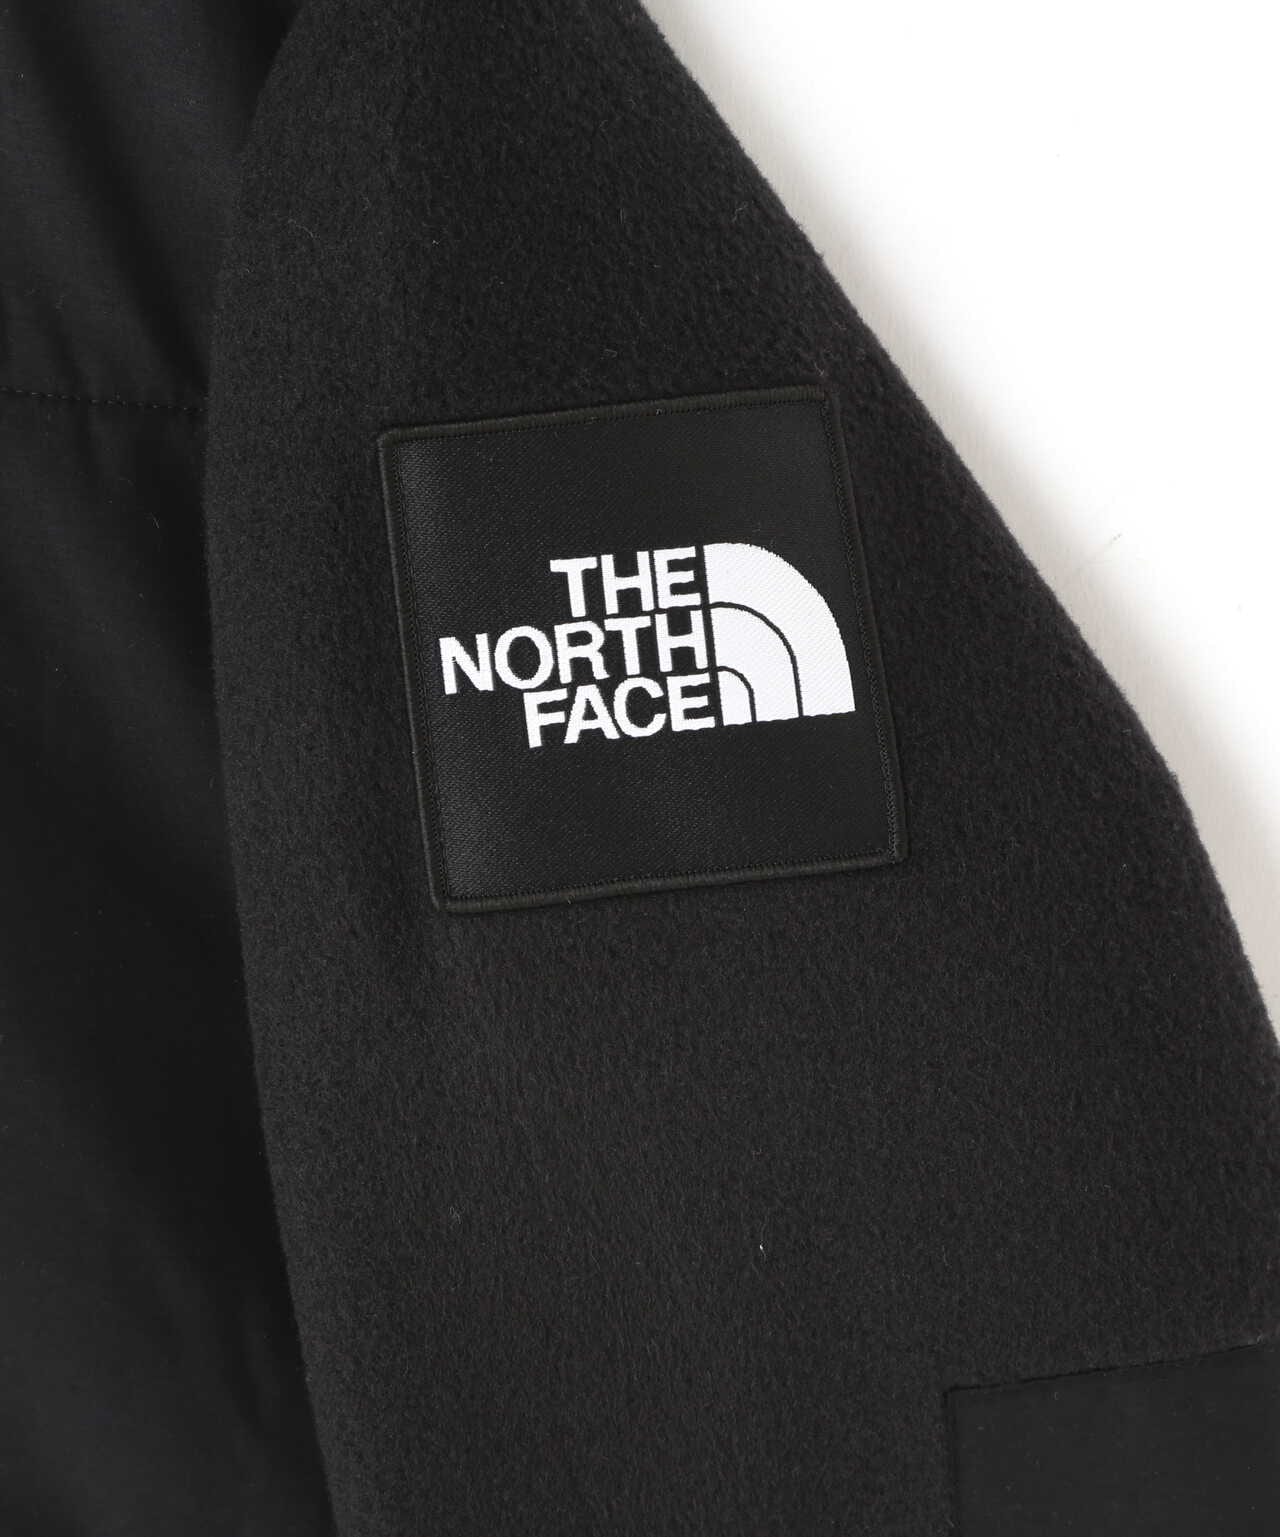 THE NORTH FACE/ザ・ノースフェイス/Denali Jacket/デナリジャケット 